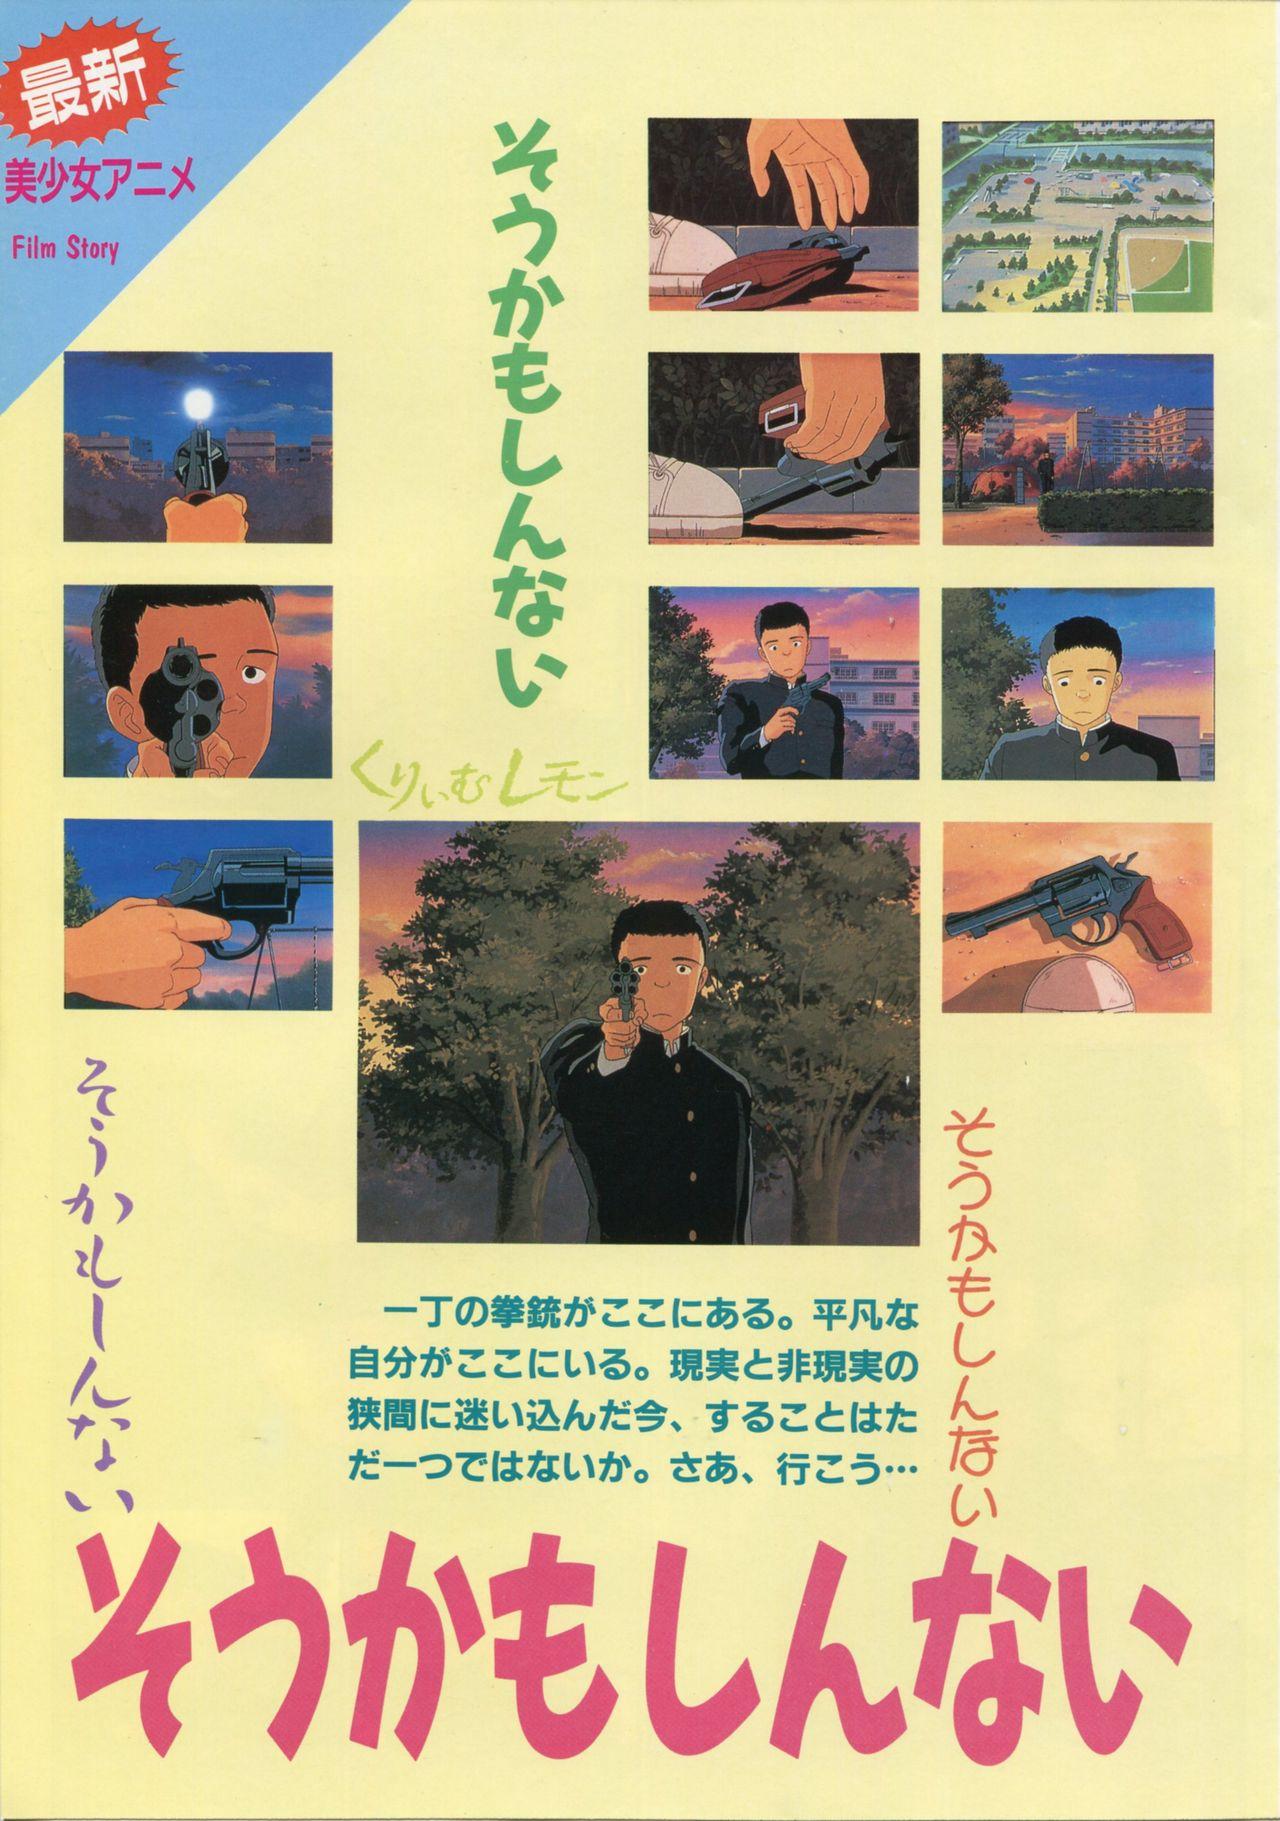 Bishoujo Anime Daizenshuu - Adult Animation Video Catalog 1991 20